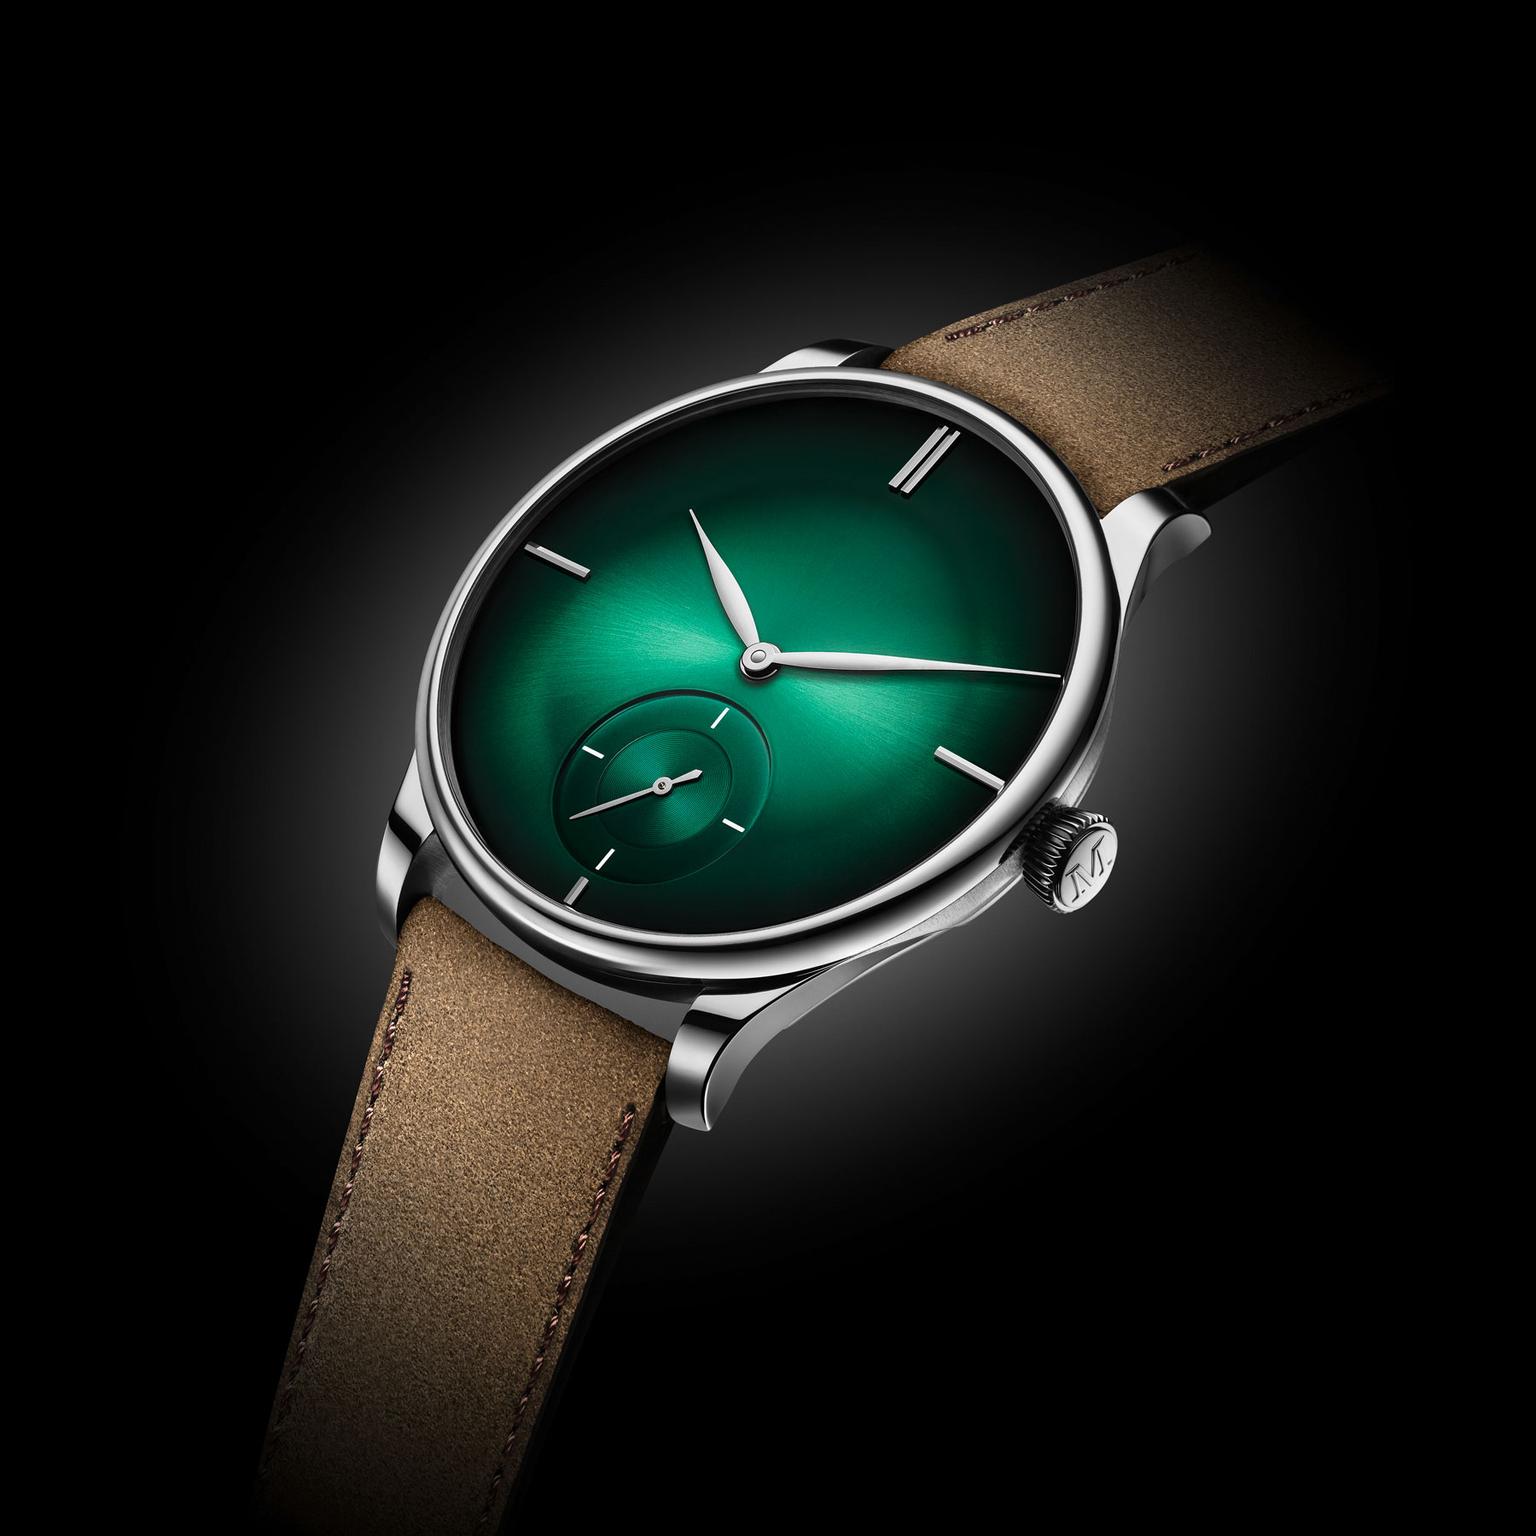 H. Moser & Cie Venturer Small Seconds XL Purity Cosmic Green watch